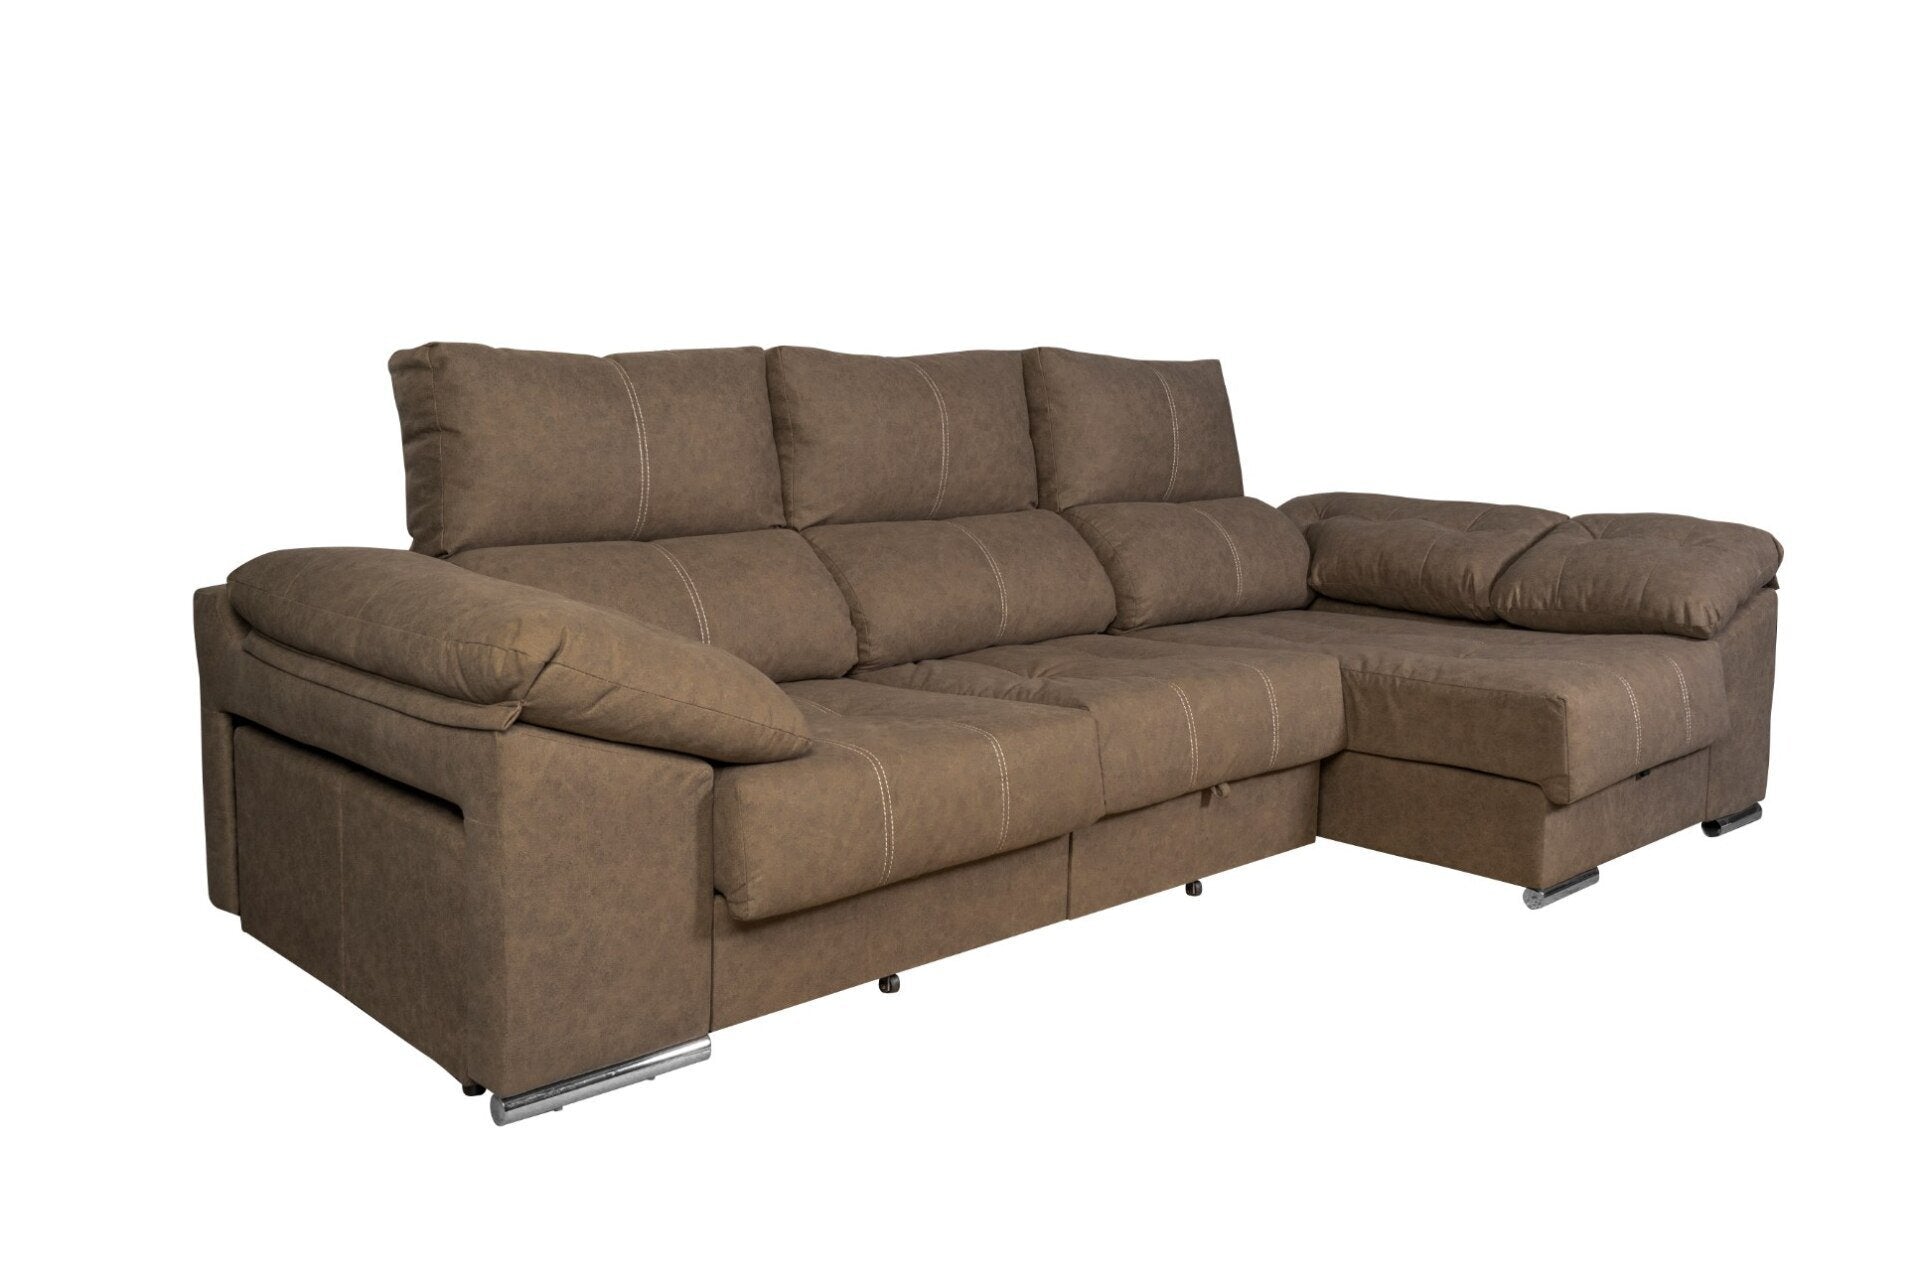 Sofa Cama Chaise Longue 275x140cm. Reclinable, con Arcon +2 pufs